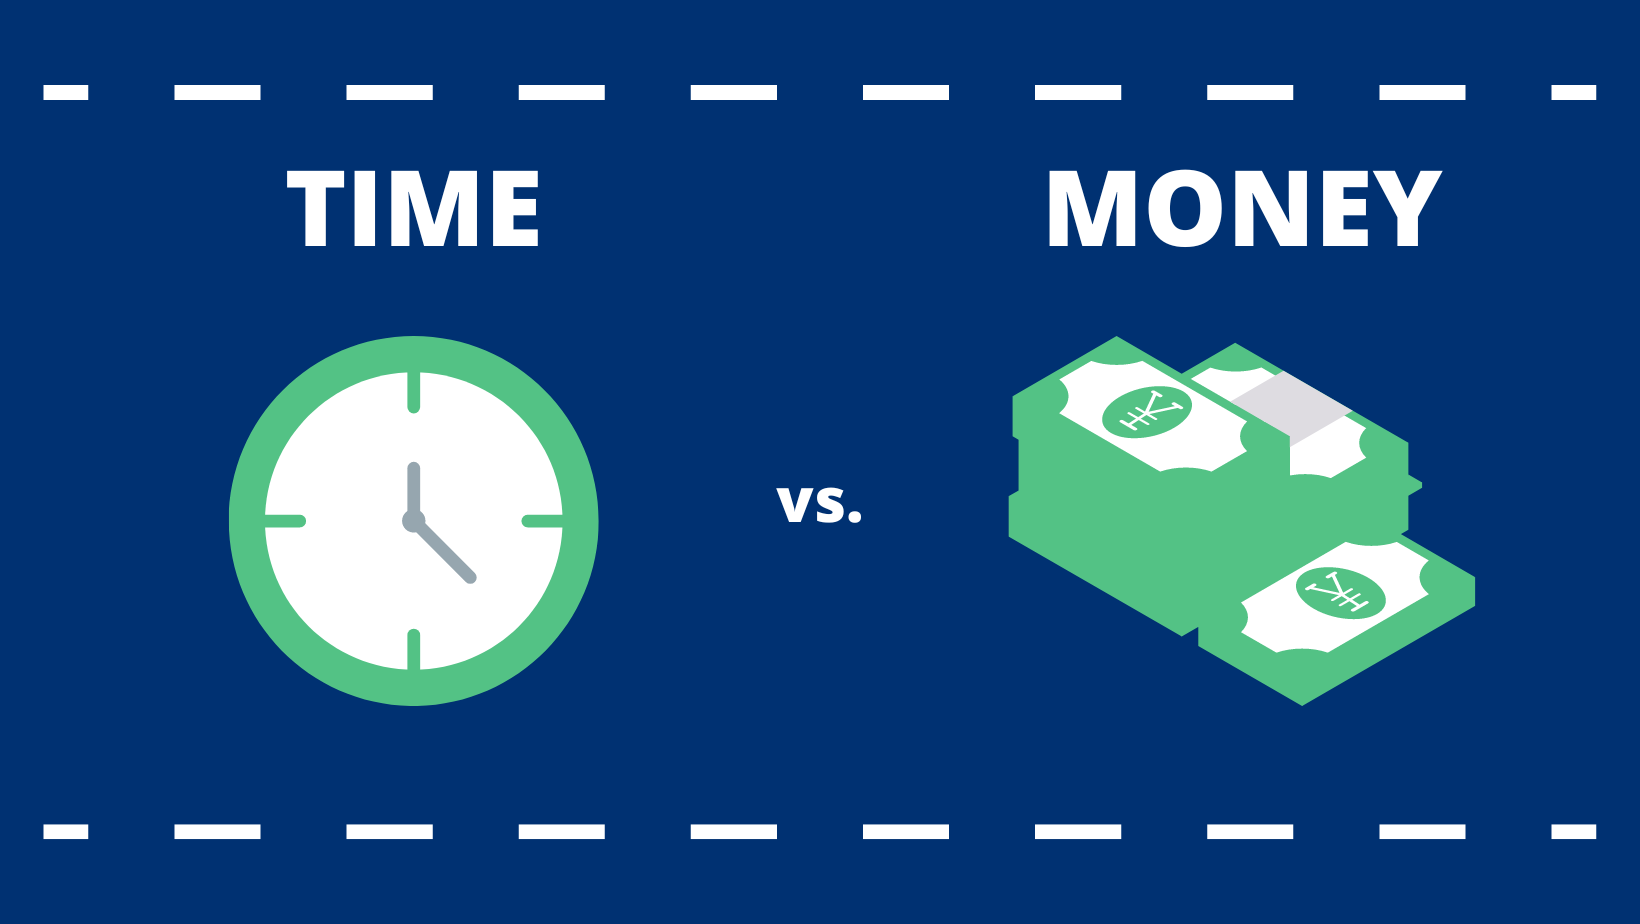 Time vs. Money